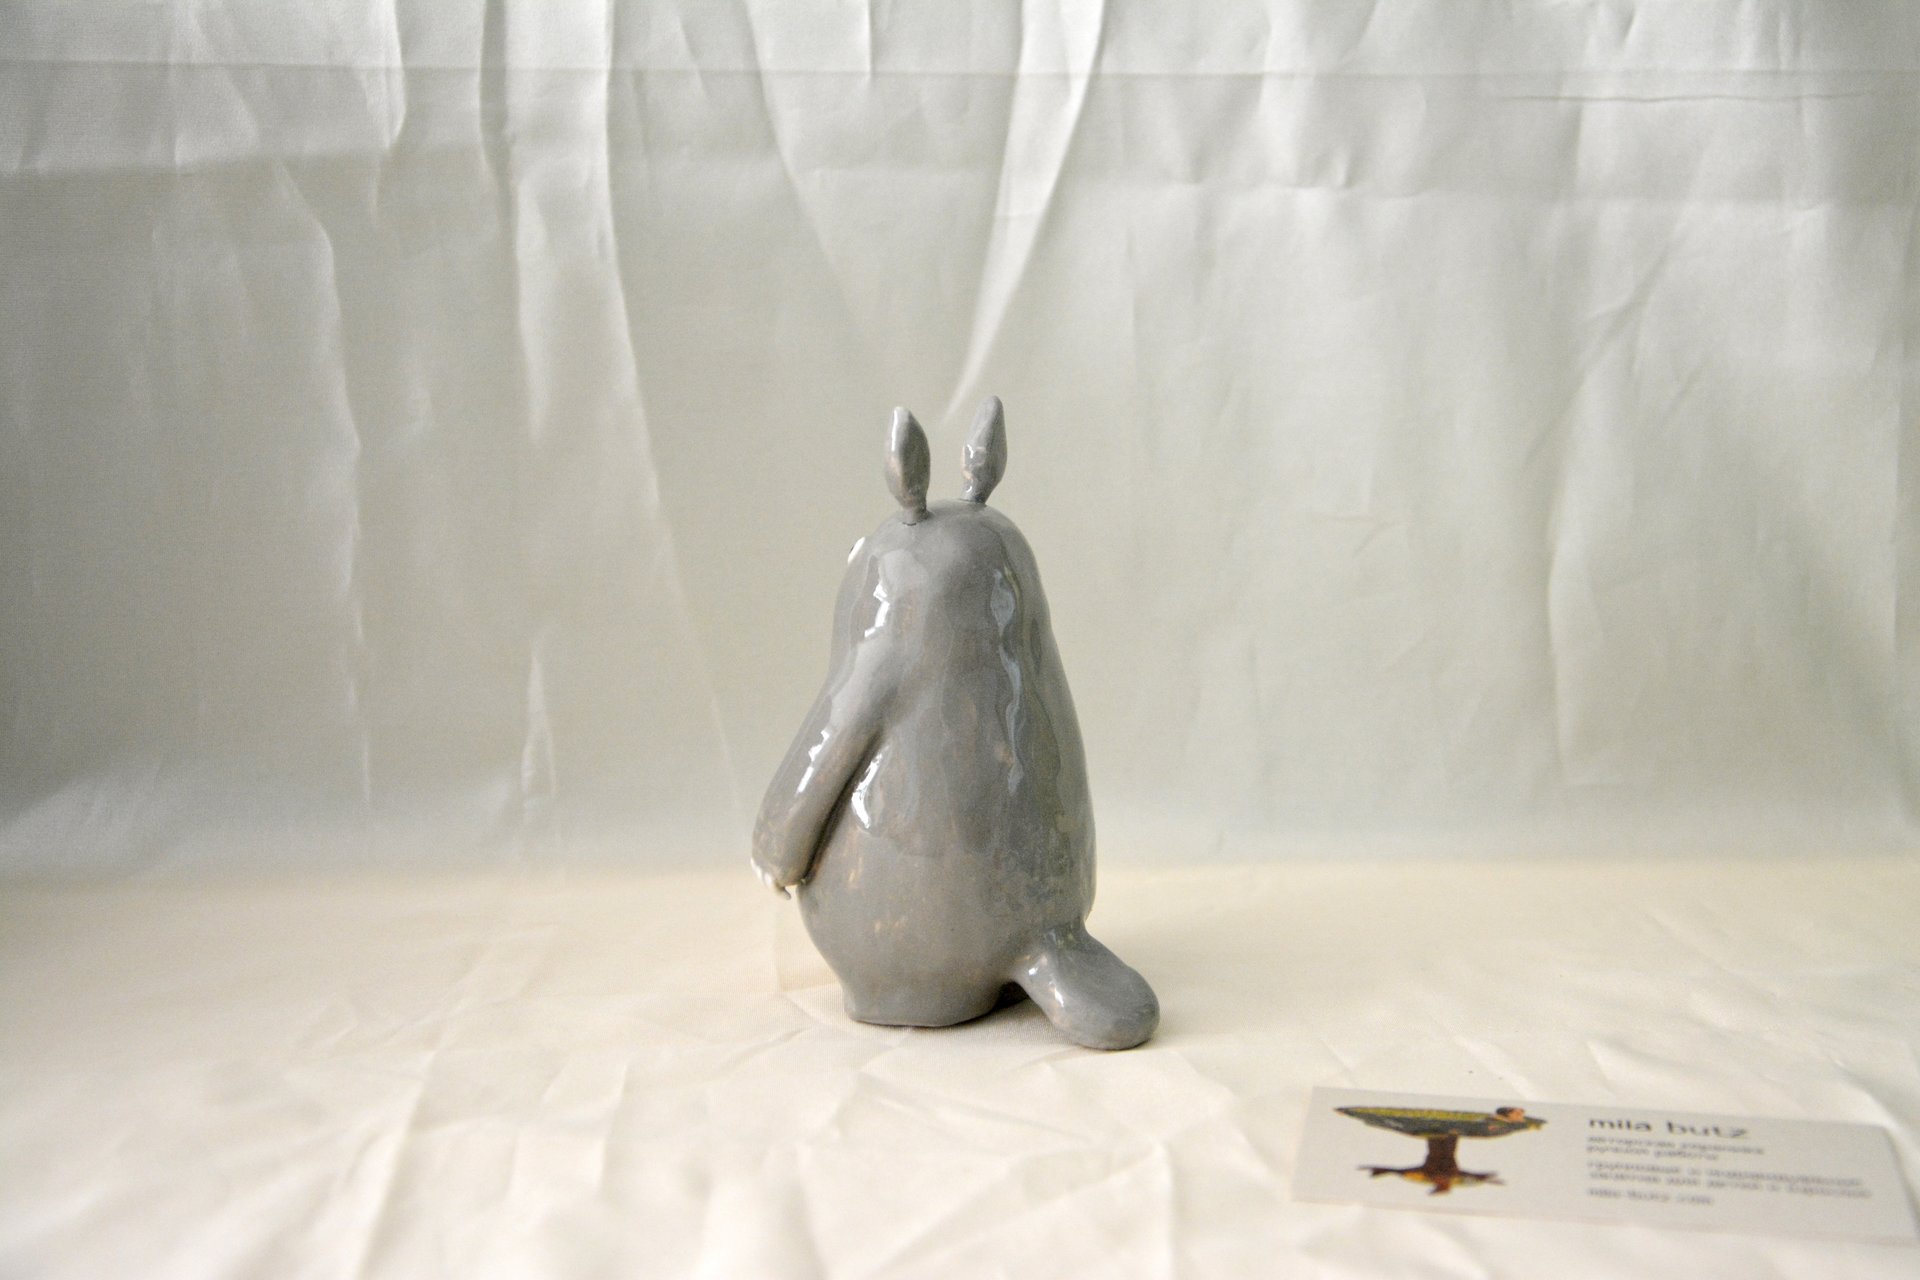 Ceramic figurine Totoro, height - 11 cm, photo 5 of 5.